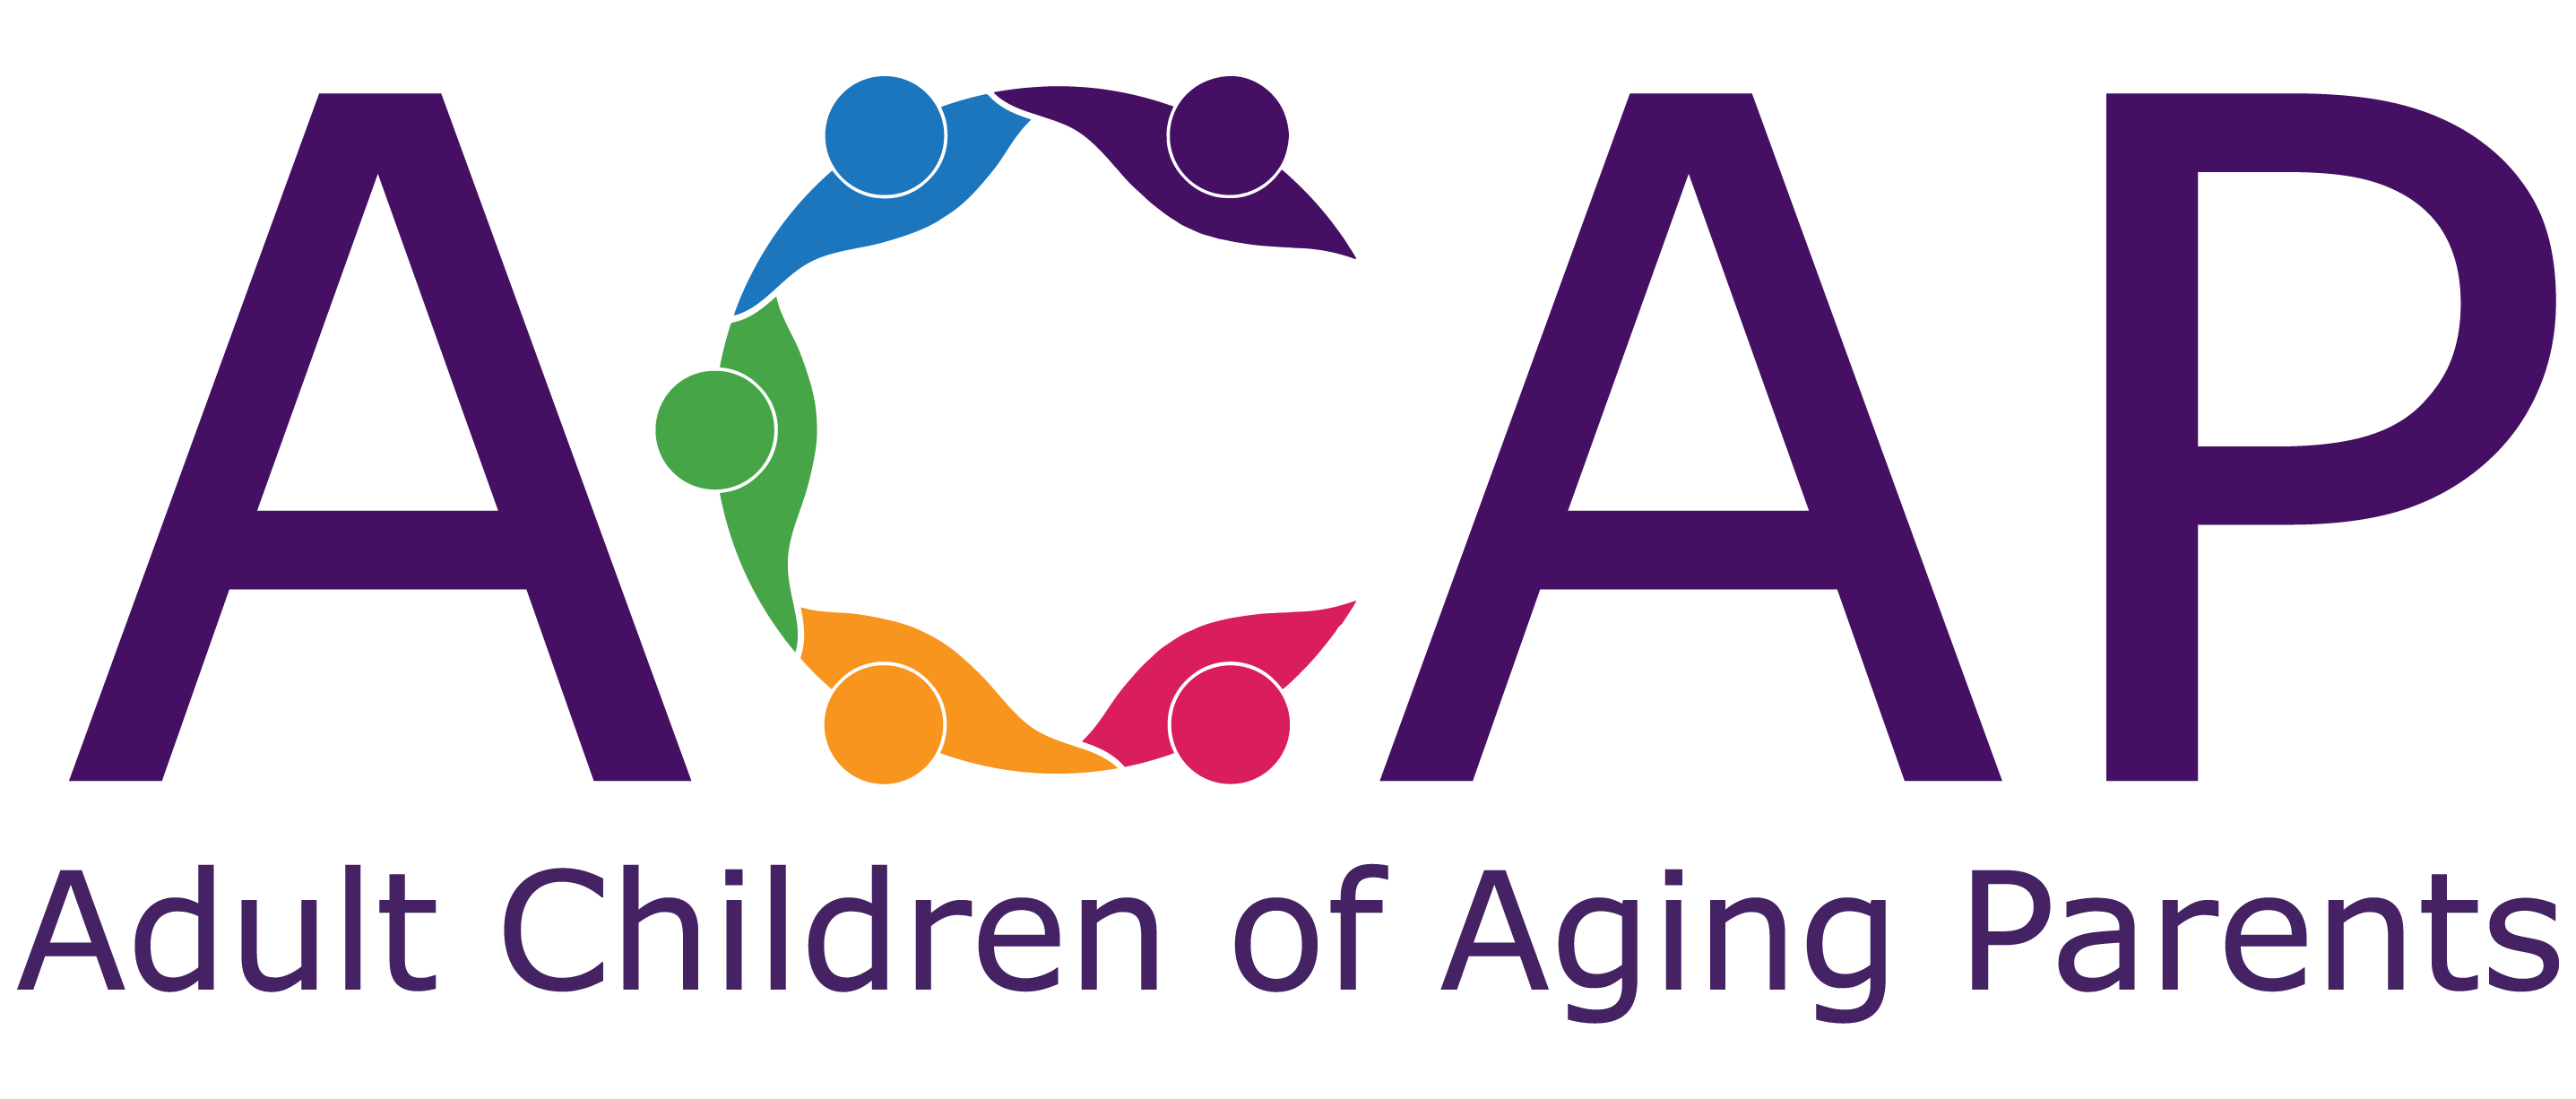 ACAP-Logo